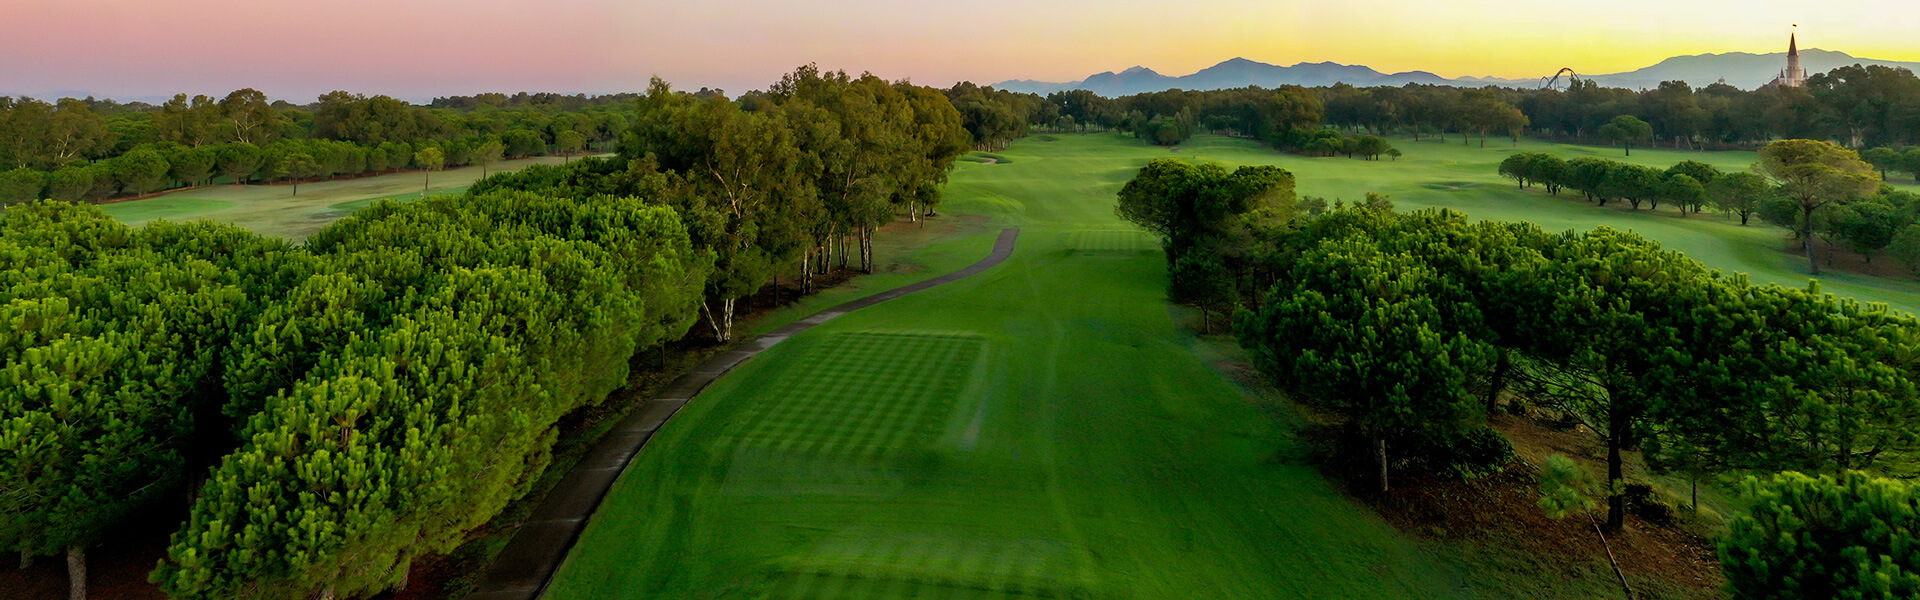 Bilyana Golf - Antalya Golf Club: PGA Sultan